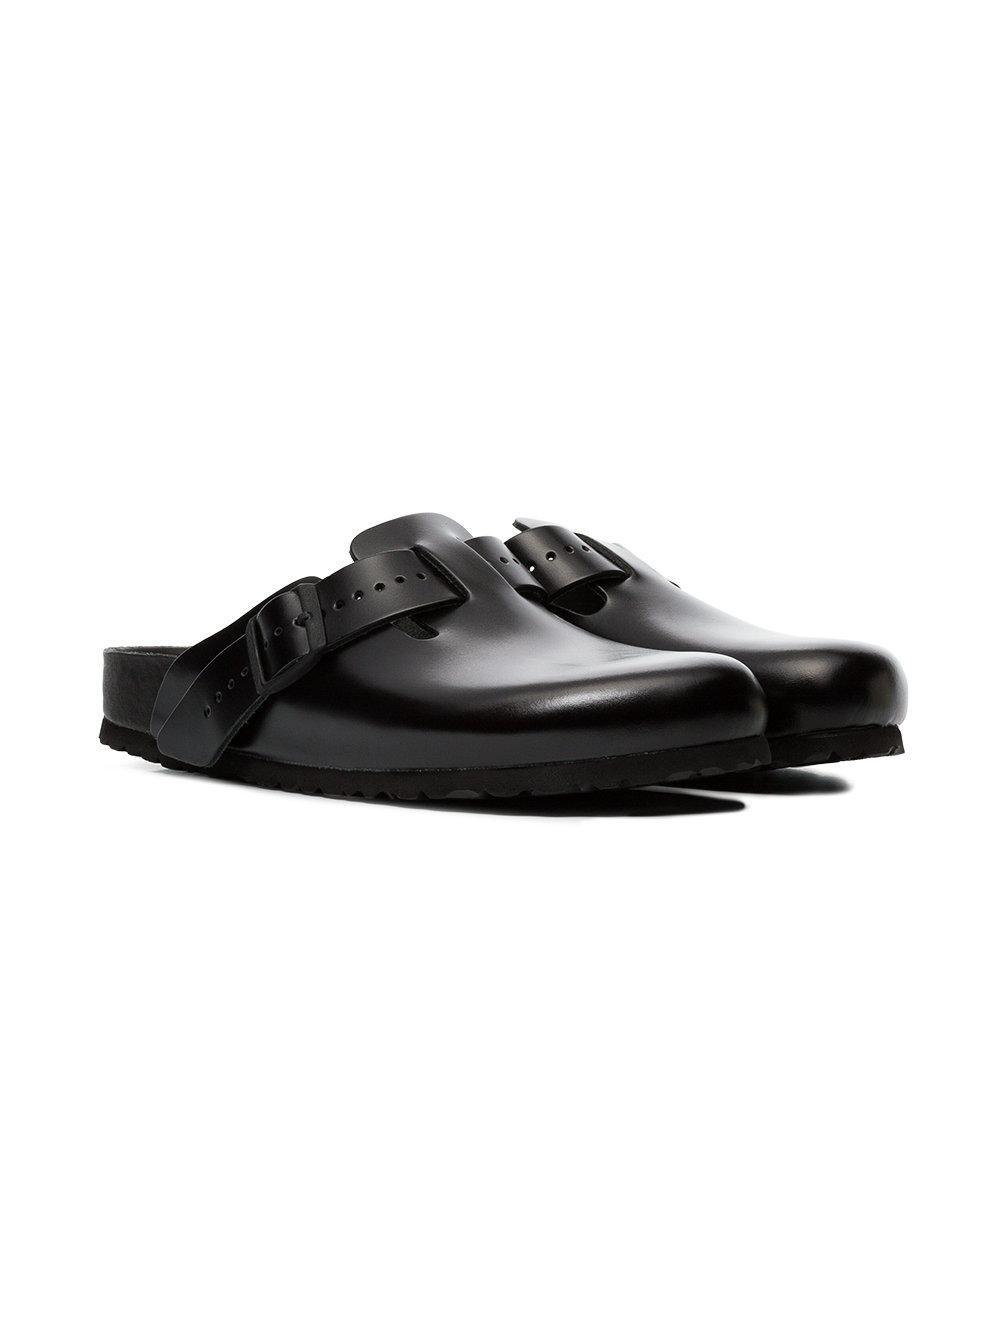 Rick Owens X Birkenstock Black Boston Leather Sandals for Men - Lyst